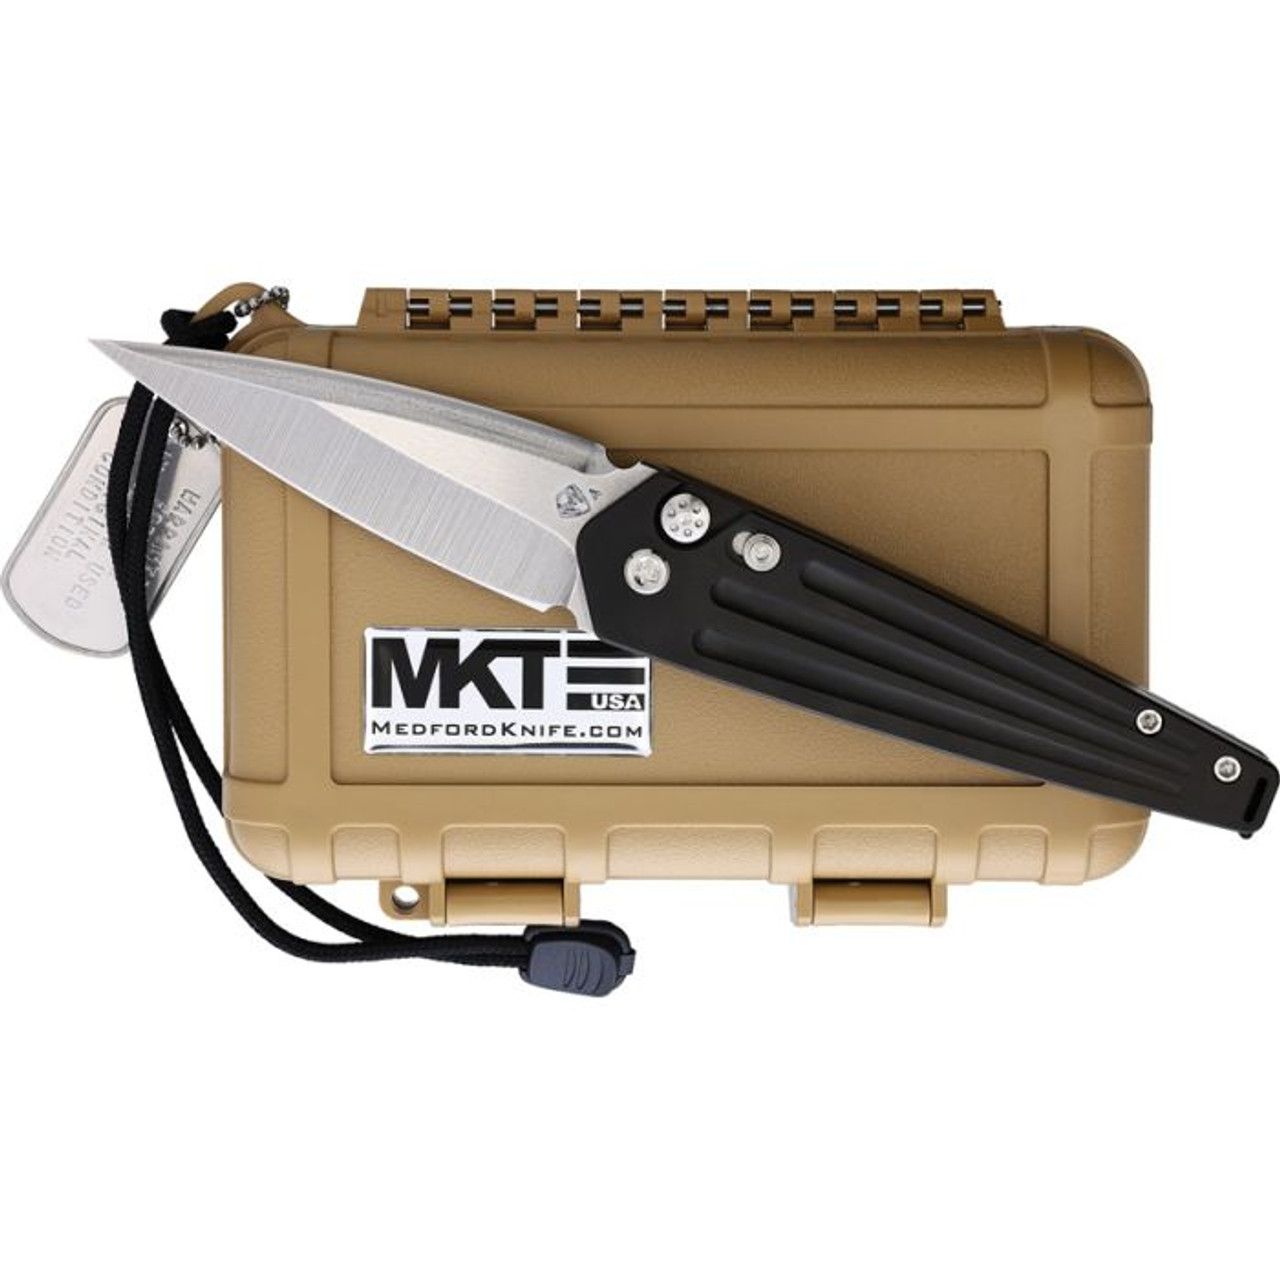 Medford Knife Nosferatu Auto (MDNATQ30PVTS) 3.5" CPM-S45VN Stonewashed Spear Point Plain Blade, Black PVD Coated Titanium Handle